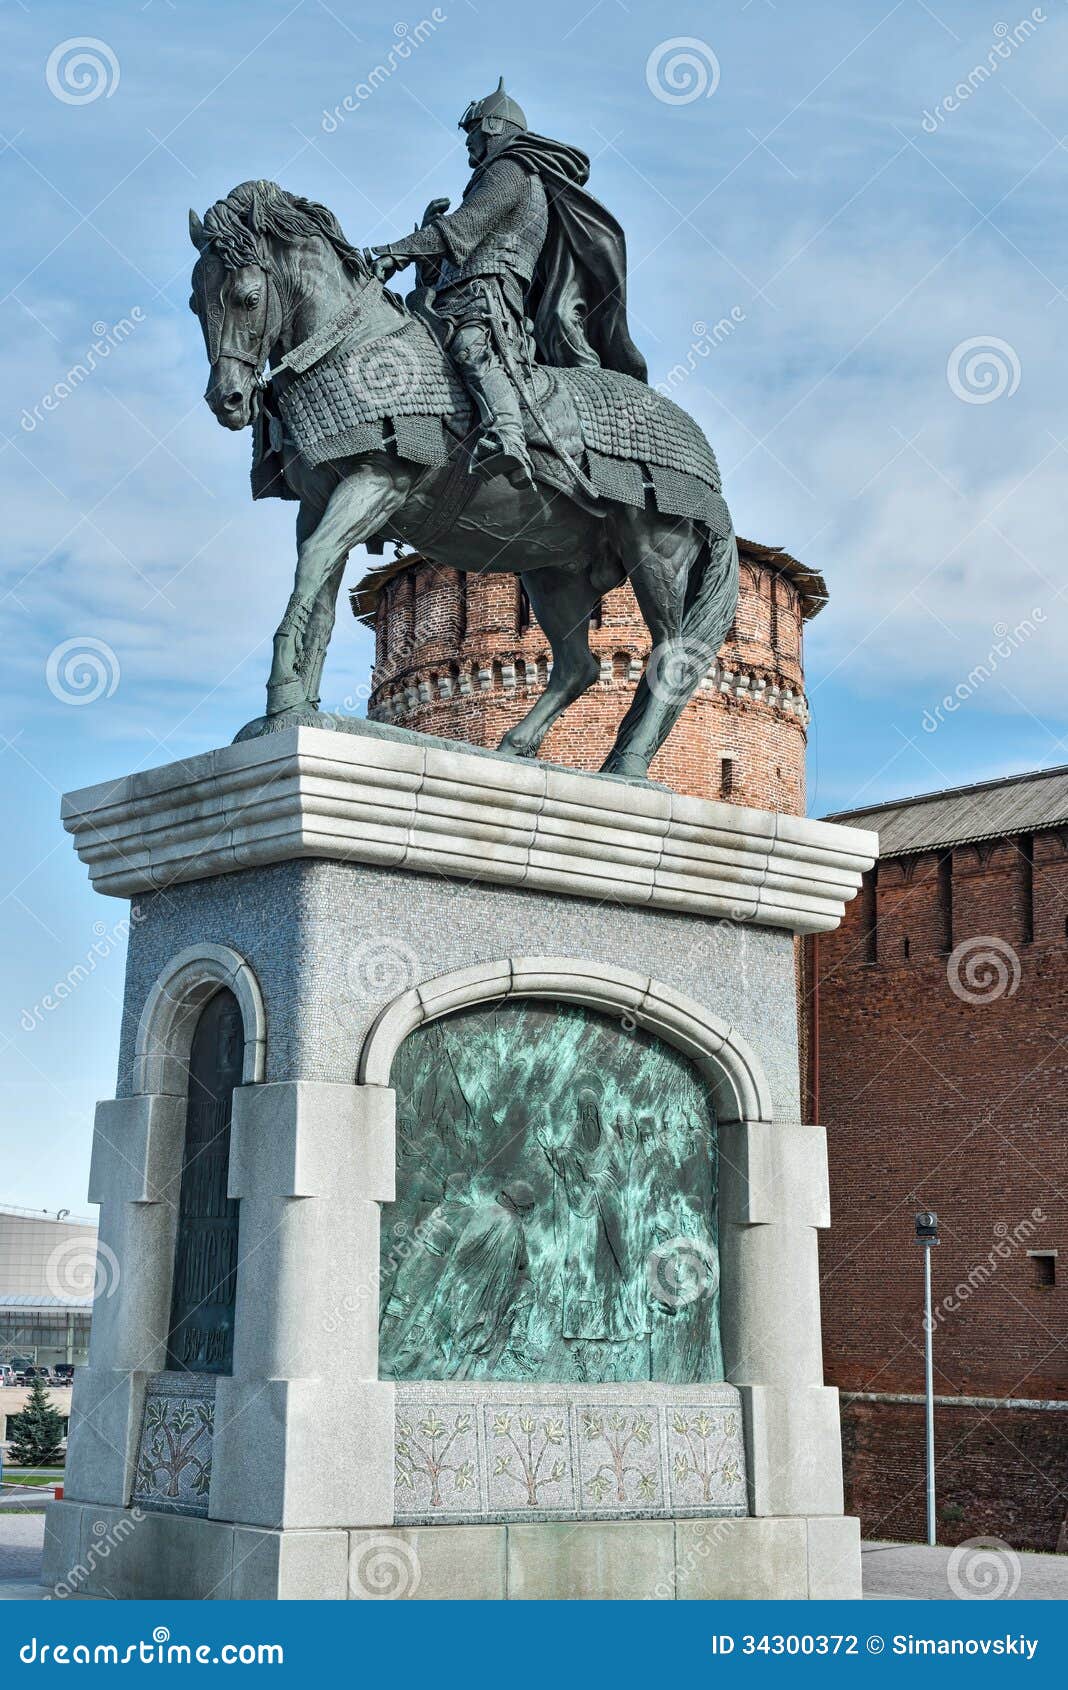 Kolomna Kremlin Russia City Of Kolomna Stock Photo Image Of Fort